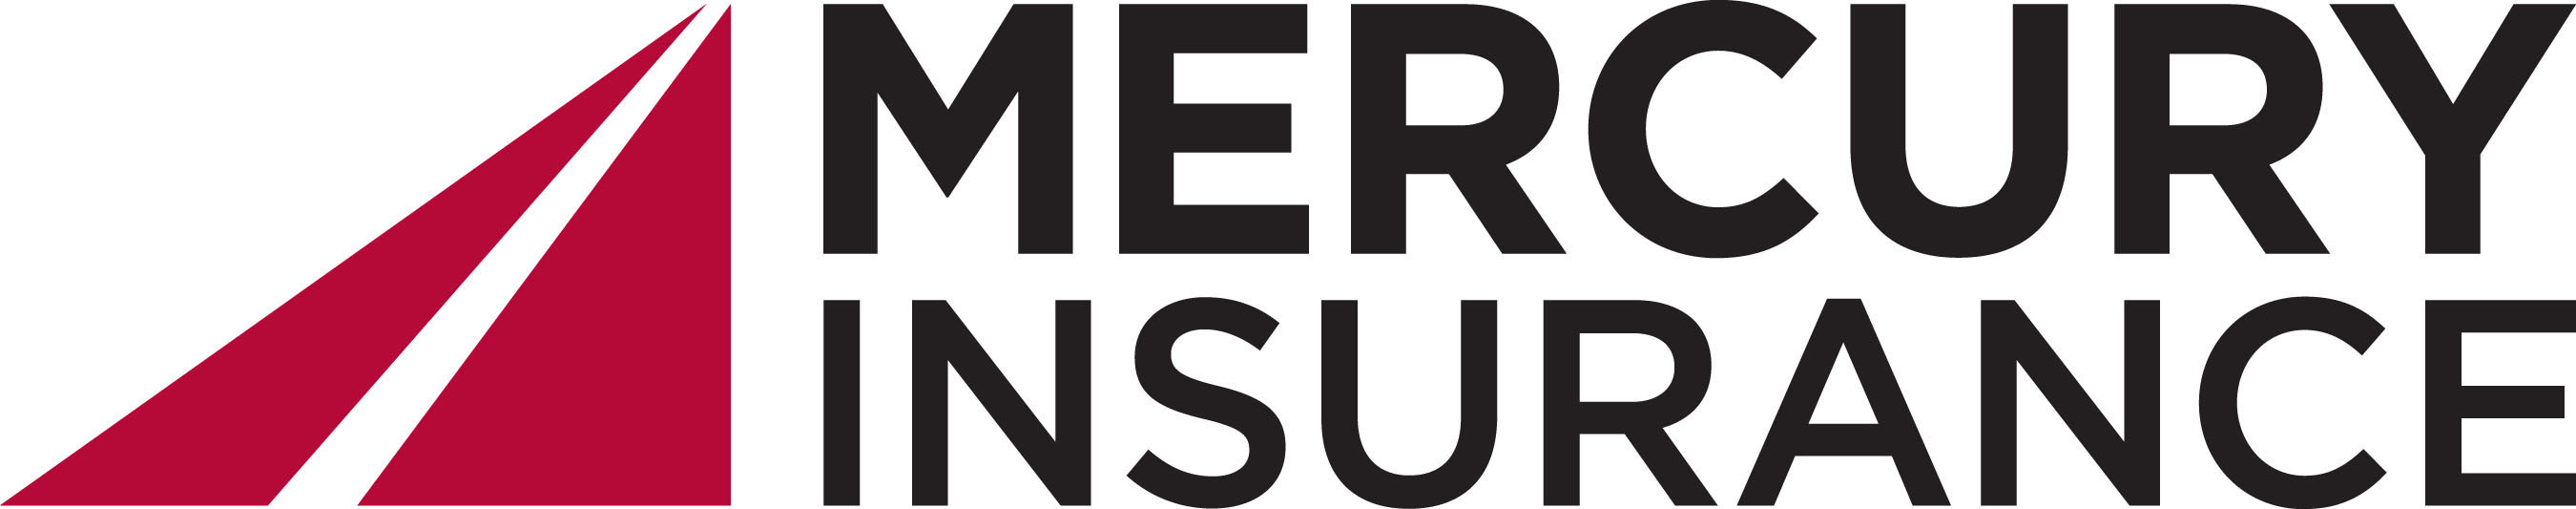 Mercury Insurance Group Logo.